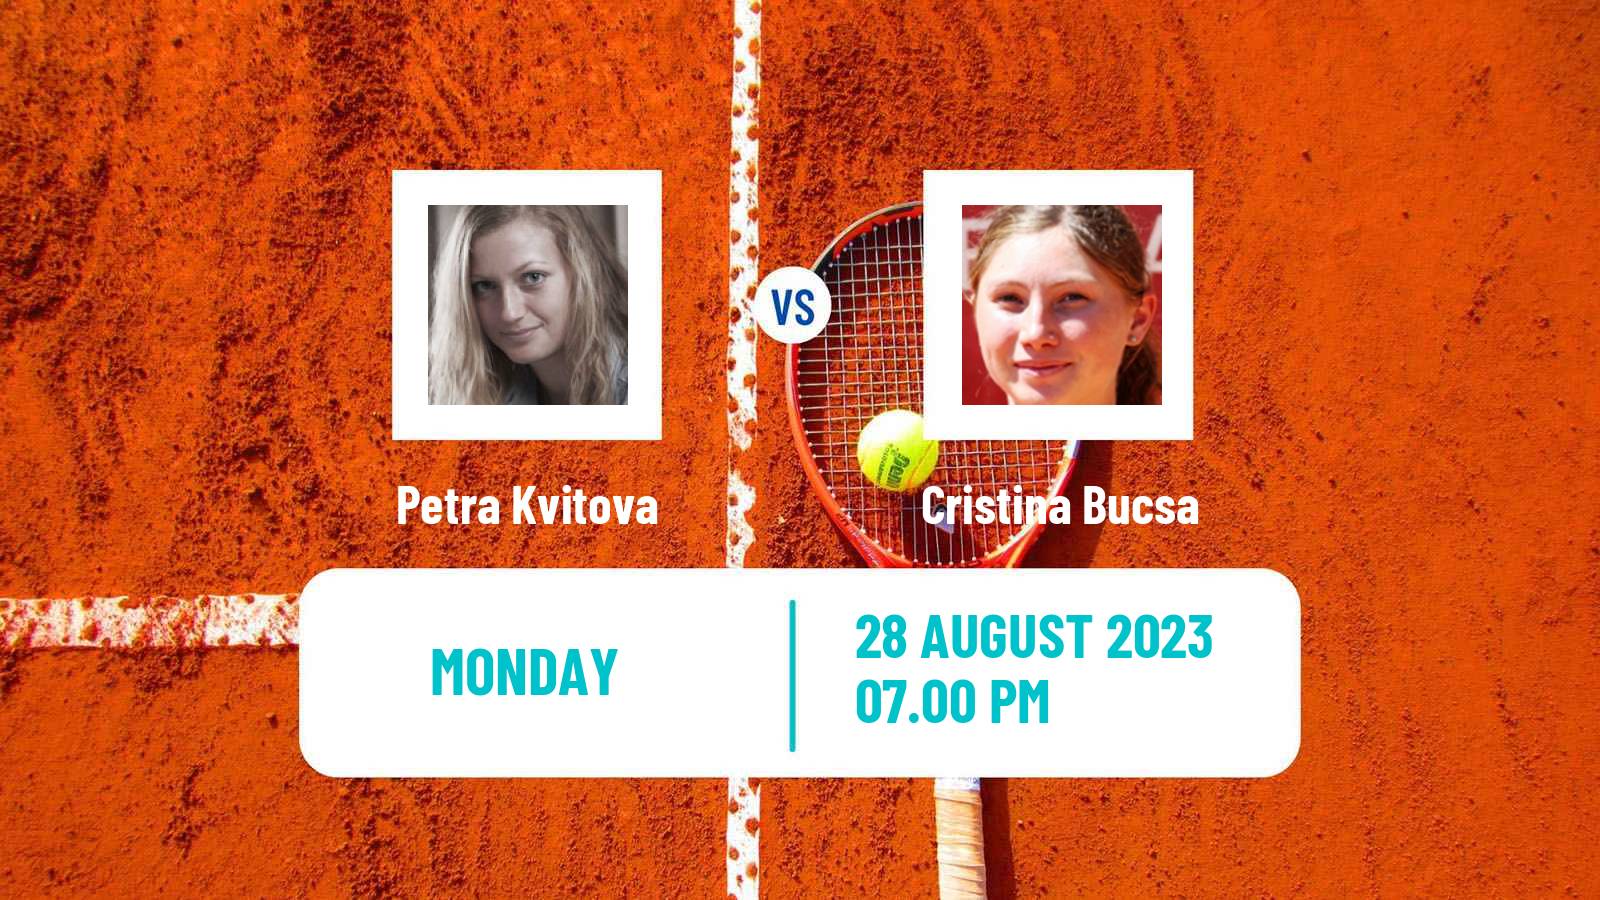 Tennis WTA US Open Petra Kvitova - Cristina Bucsa